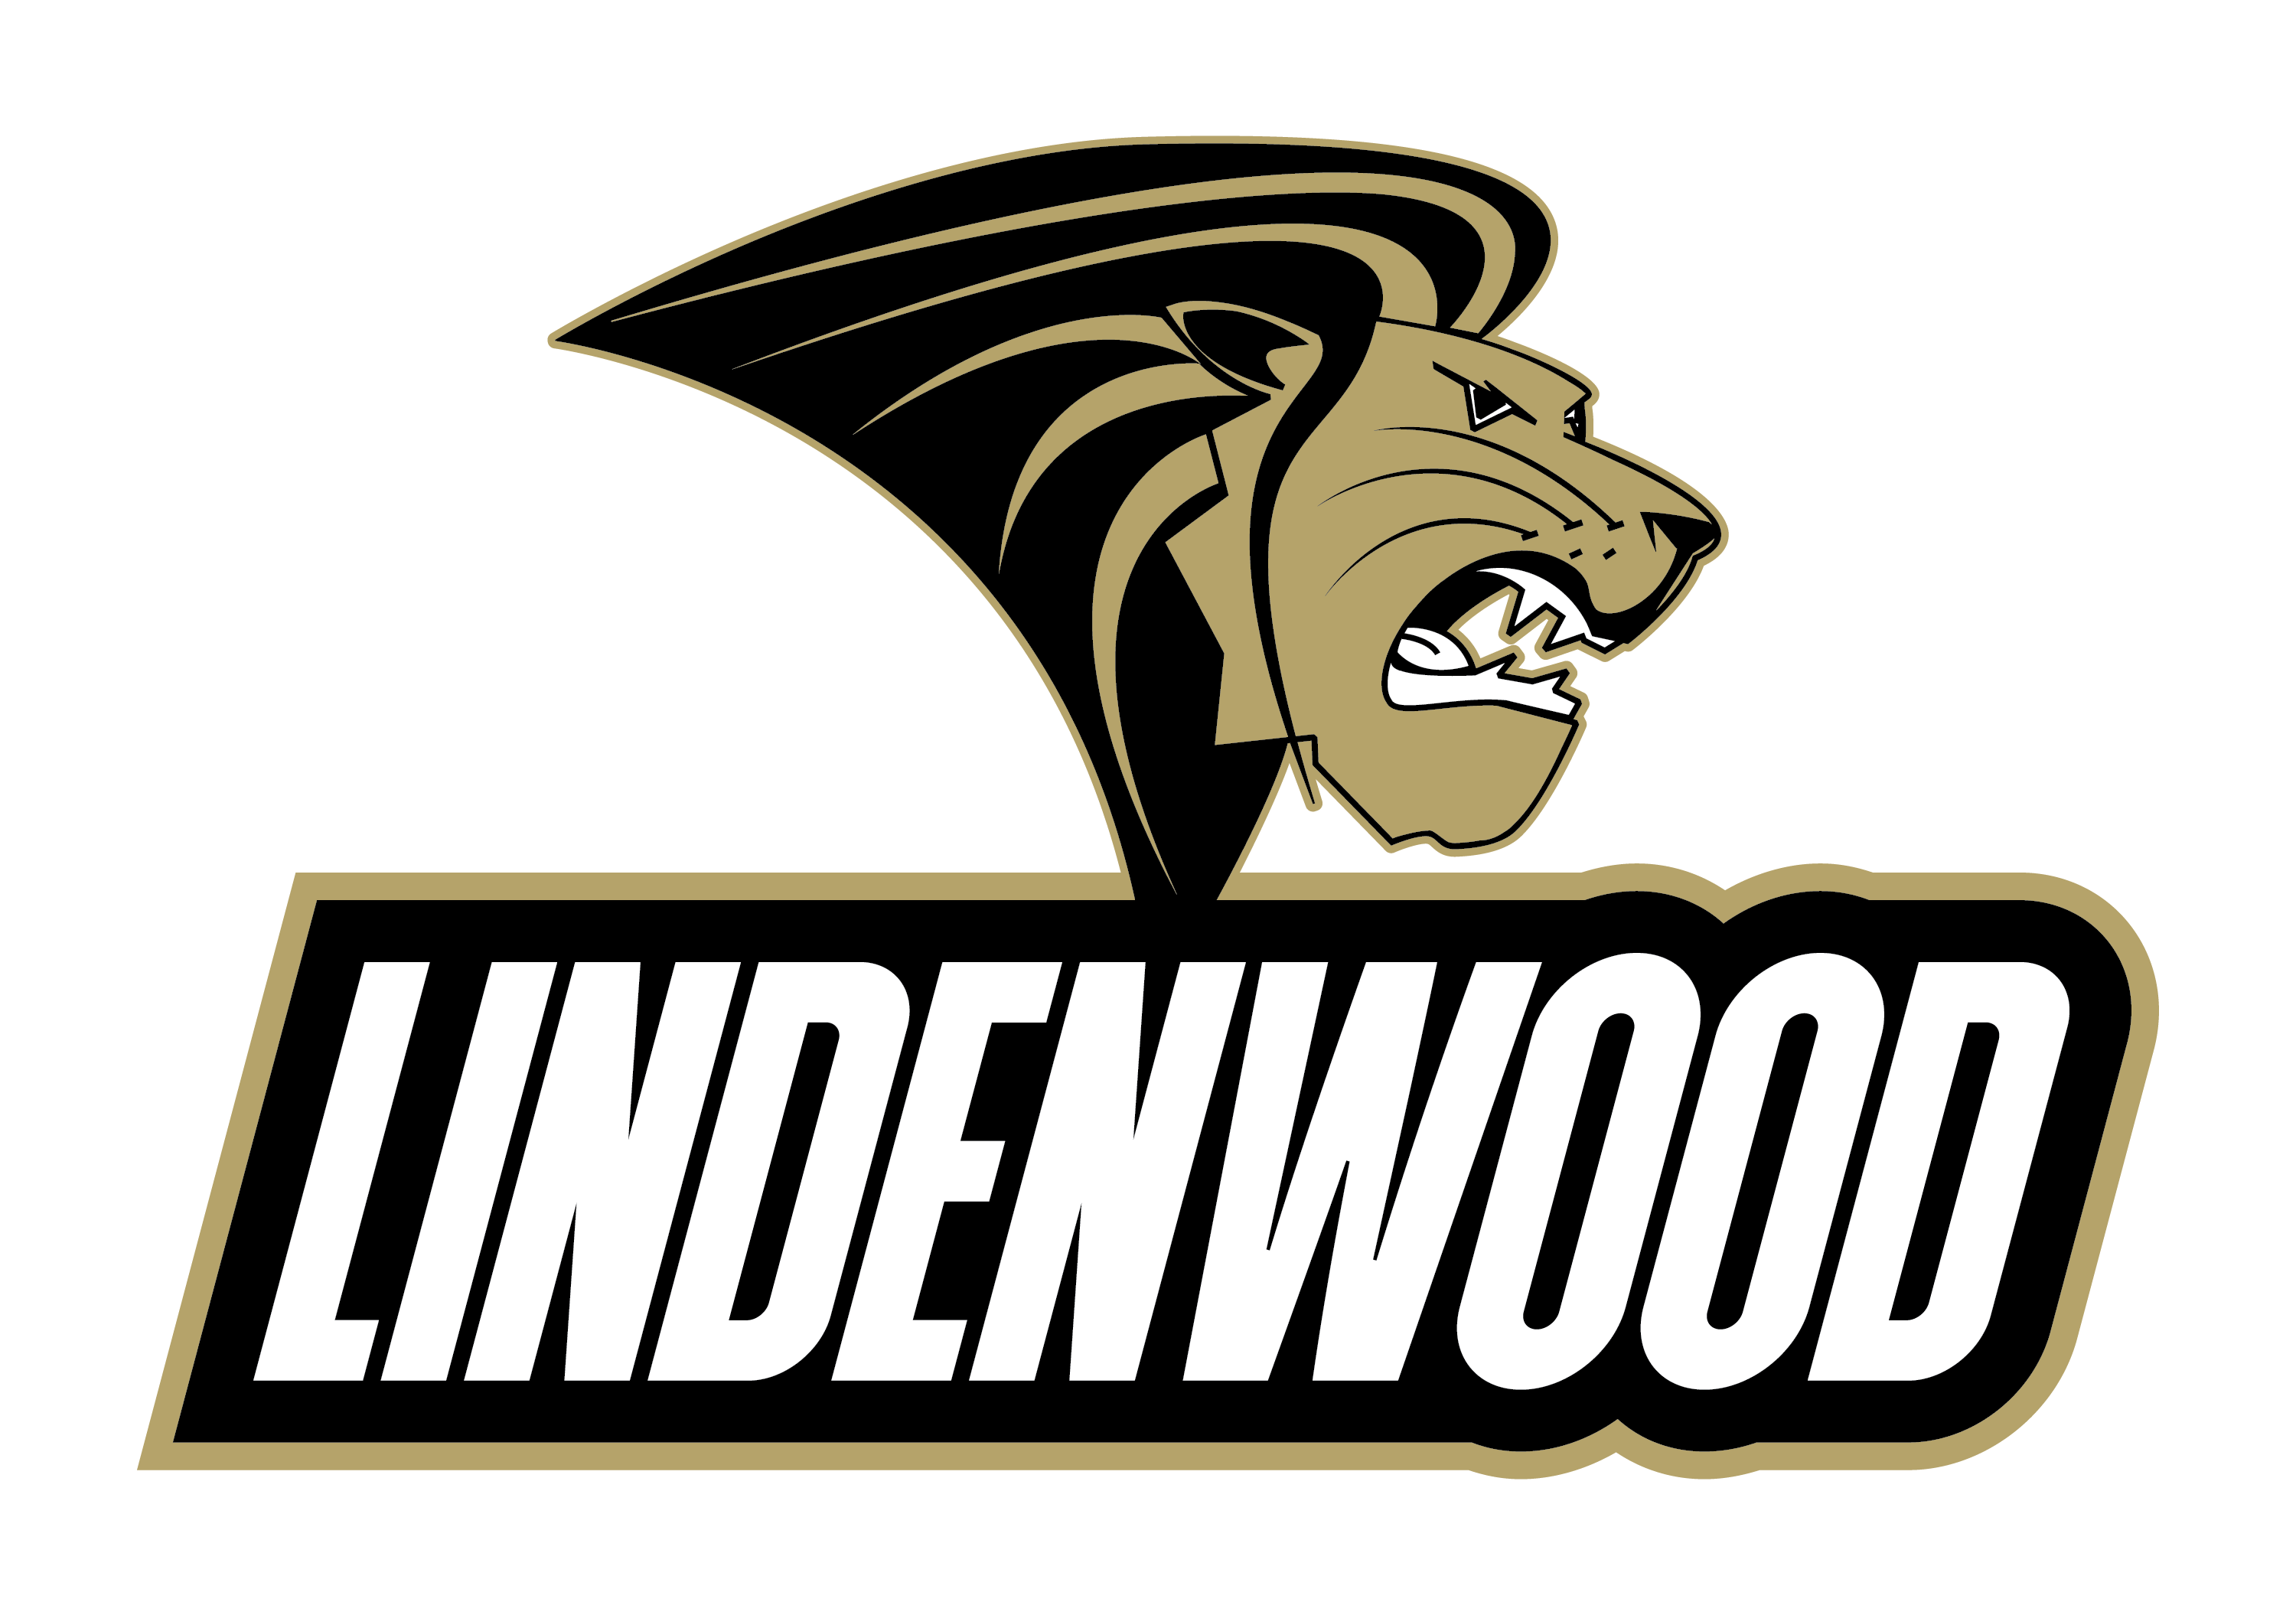 Lindenwood